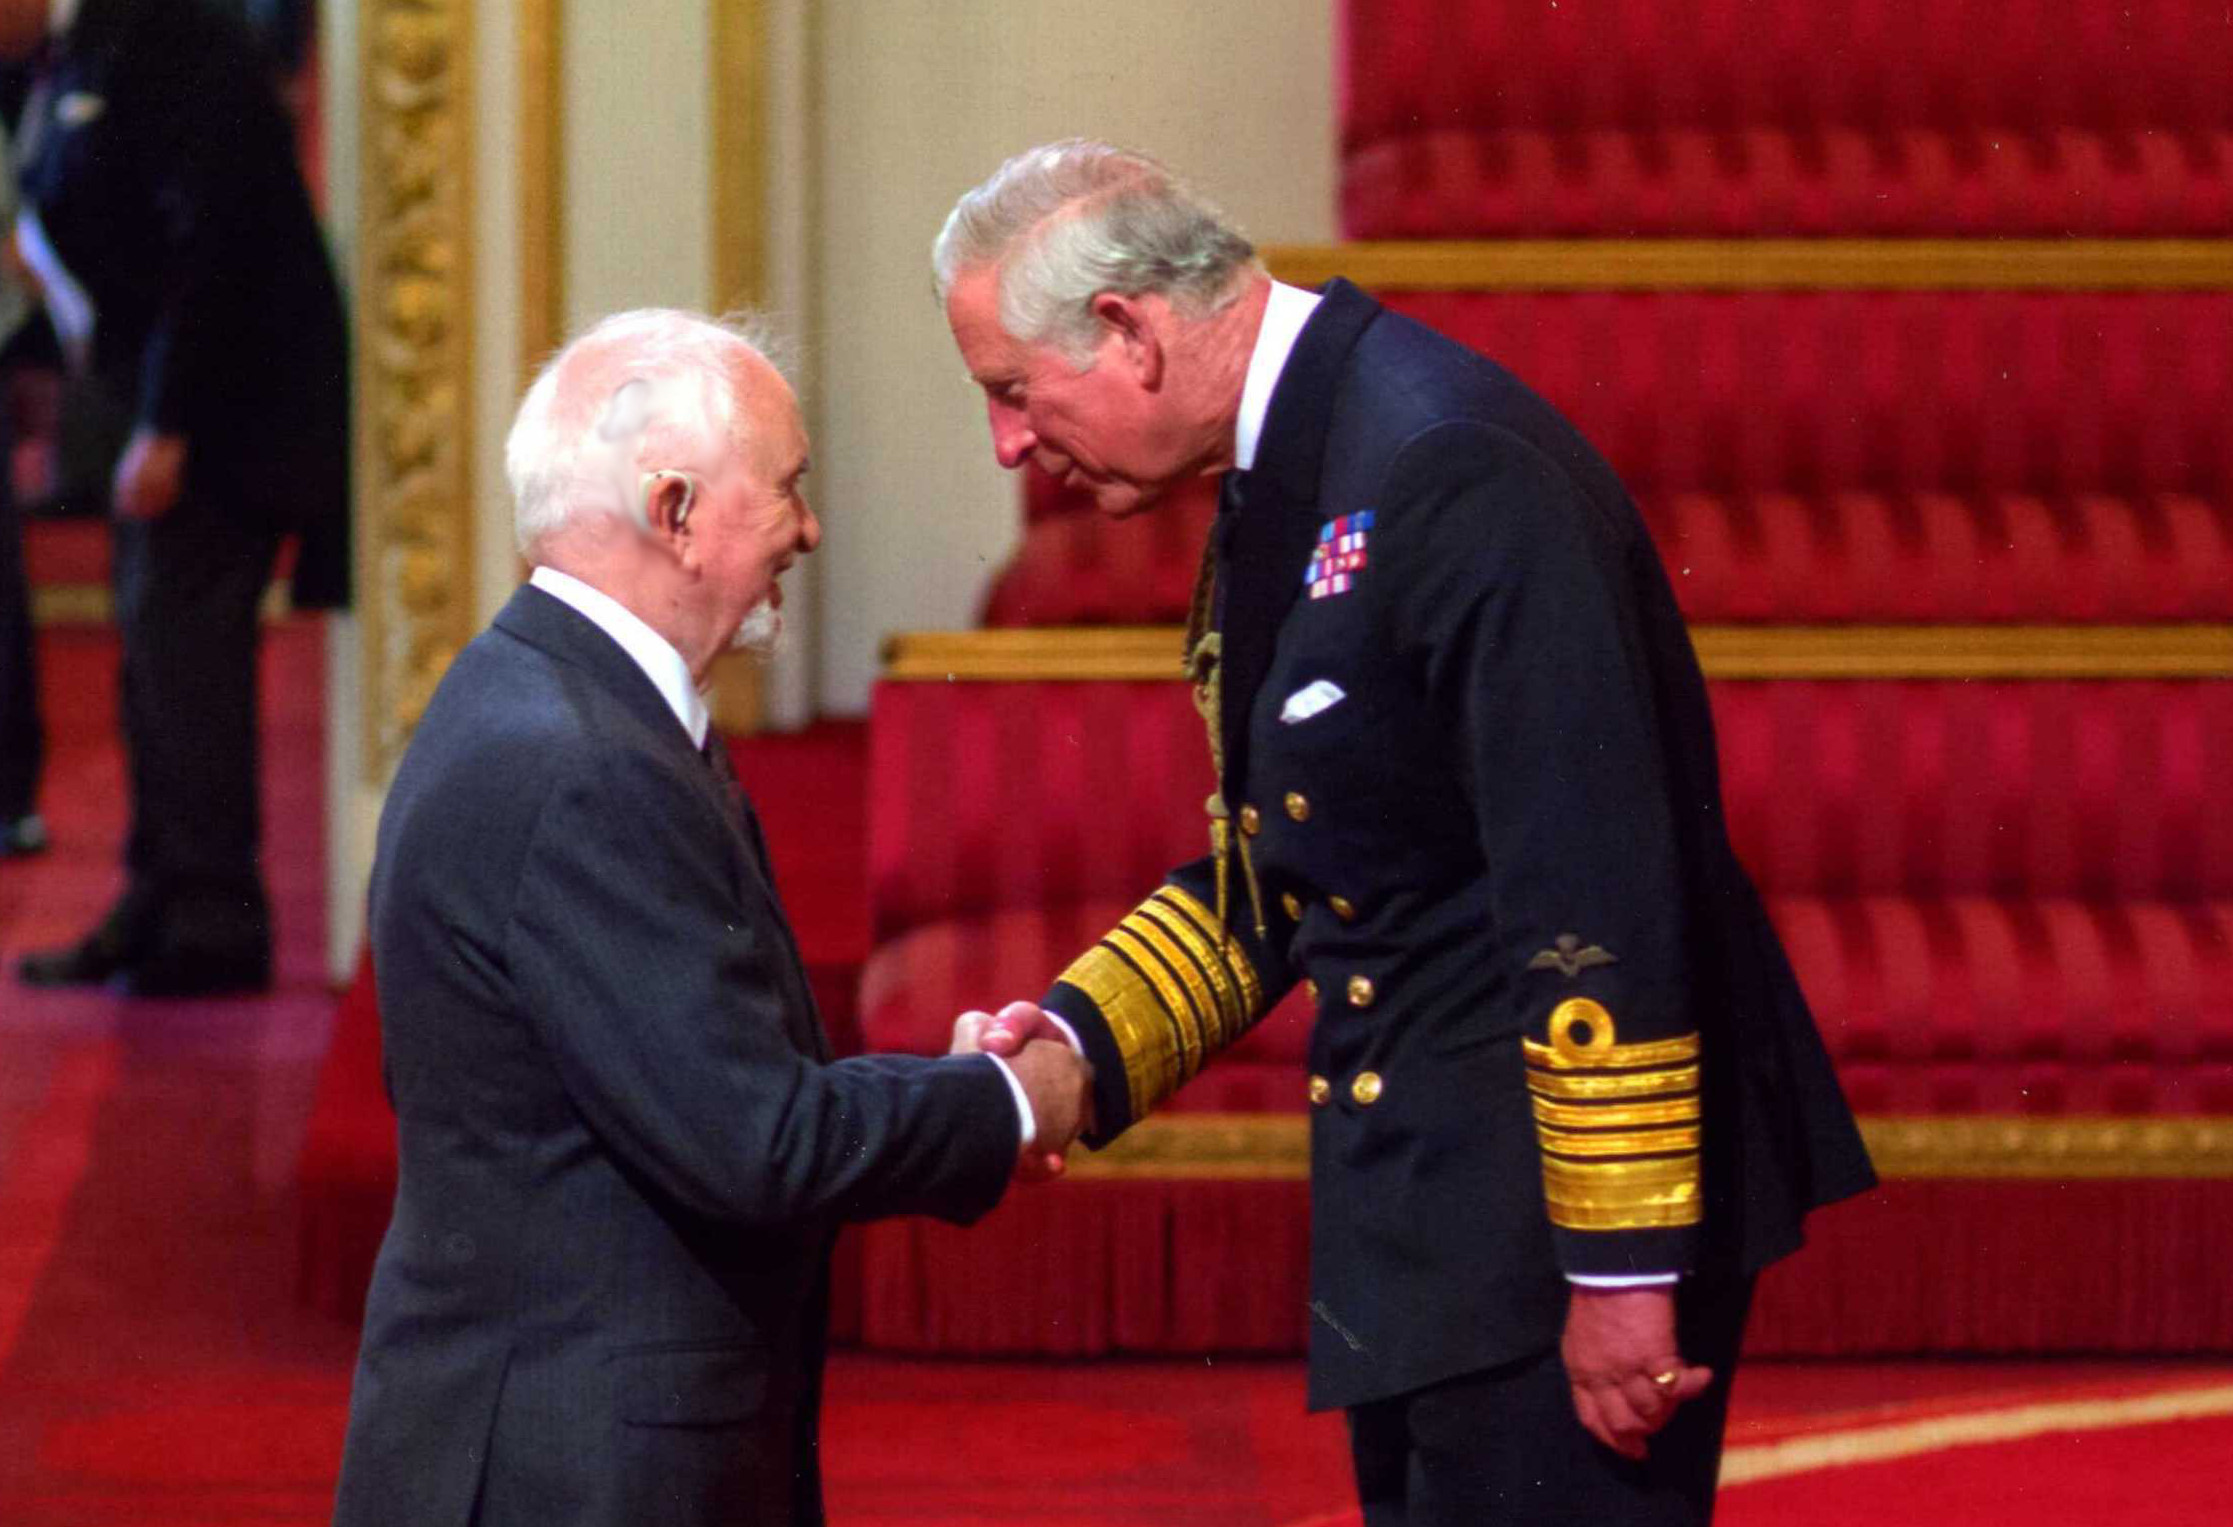 Prince Charles handshake